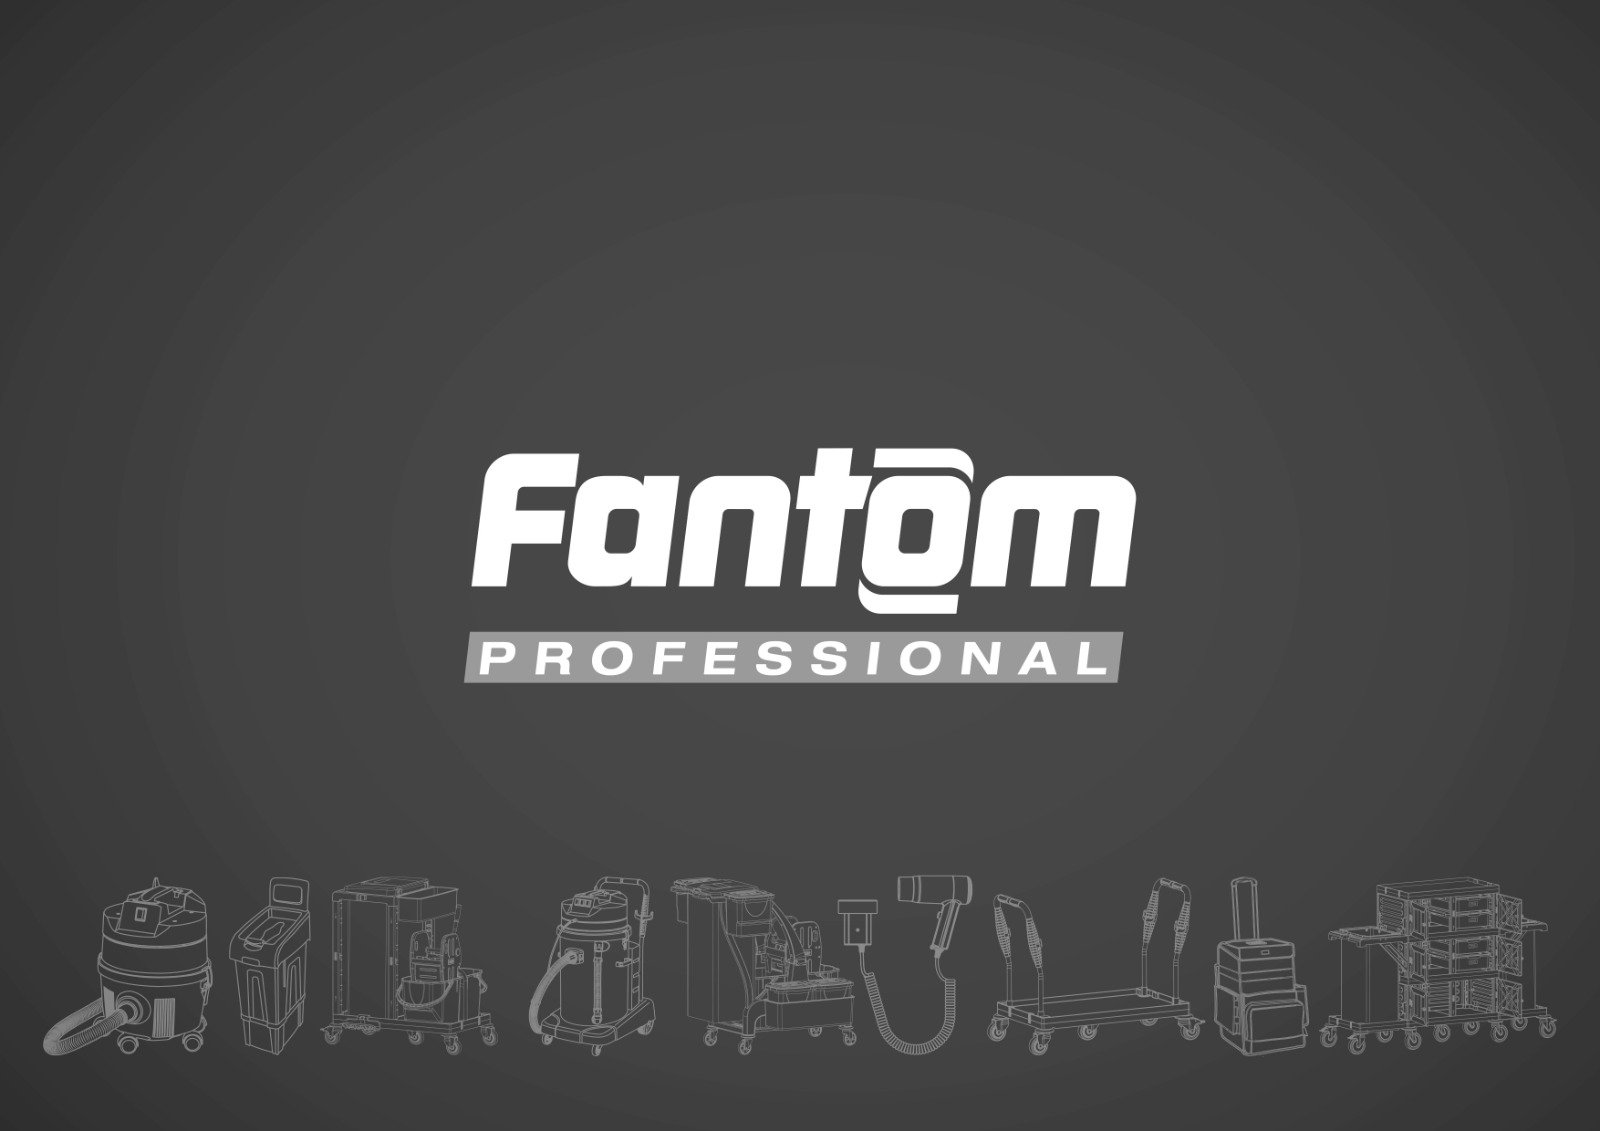 Fantom Professional Product Catalogue 2018/10